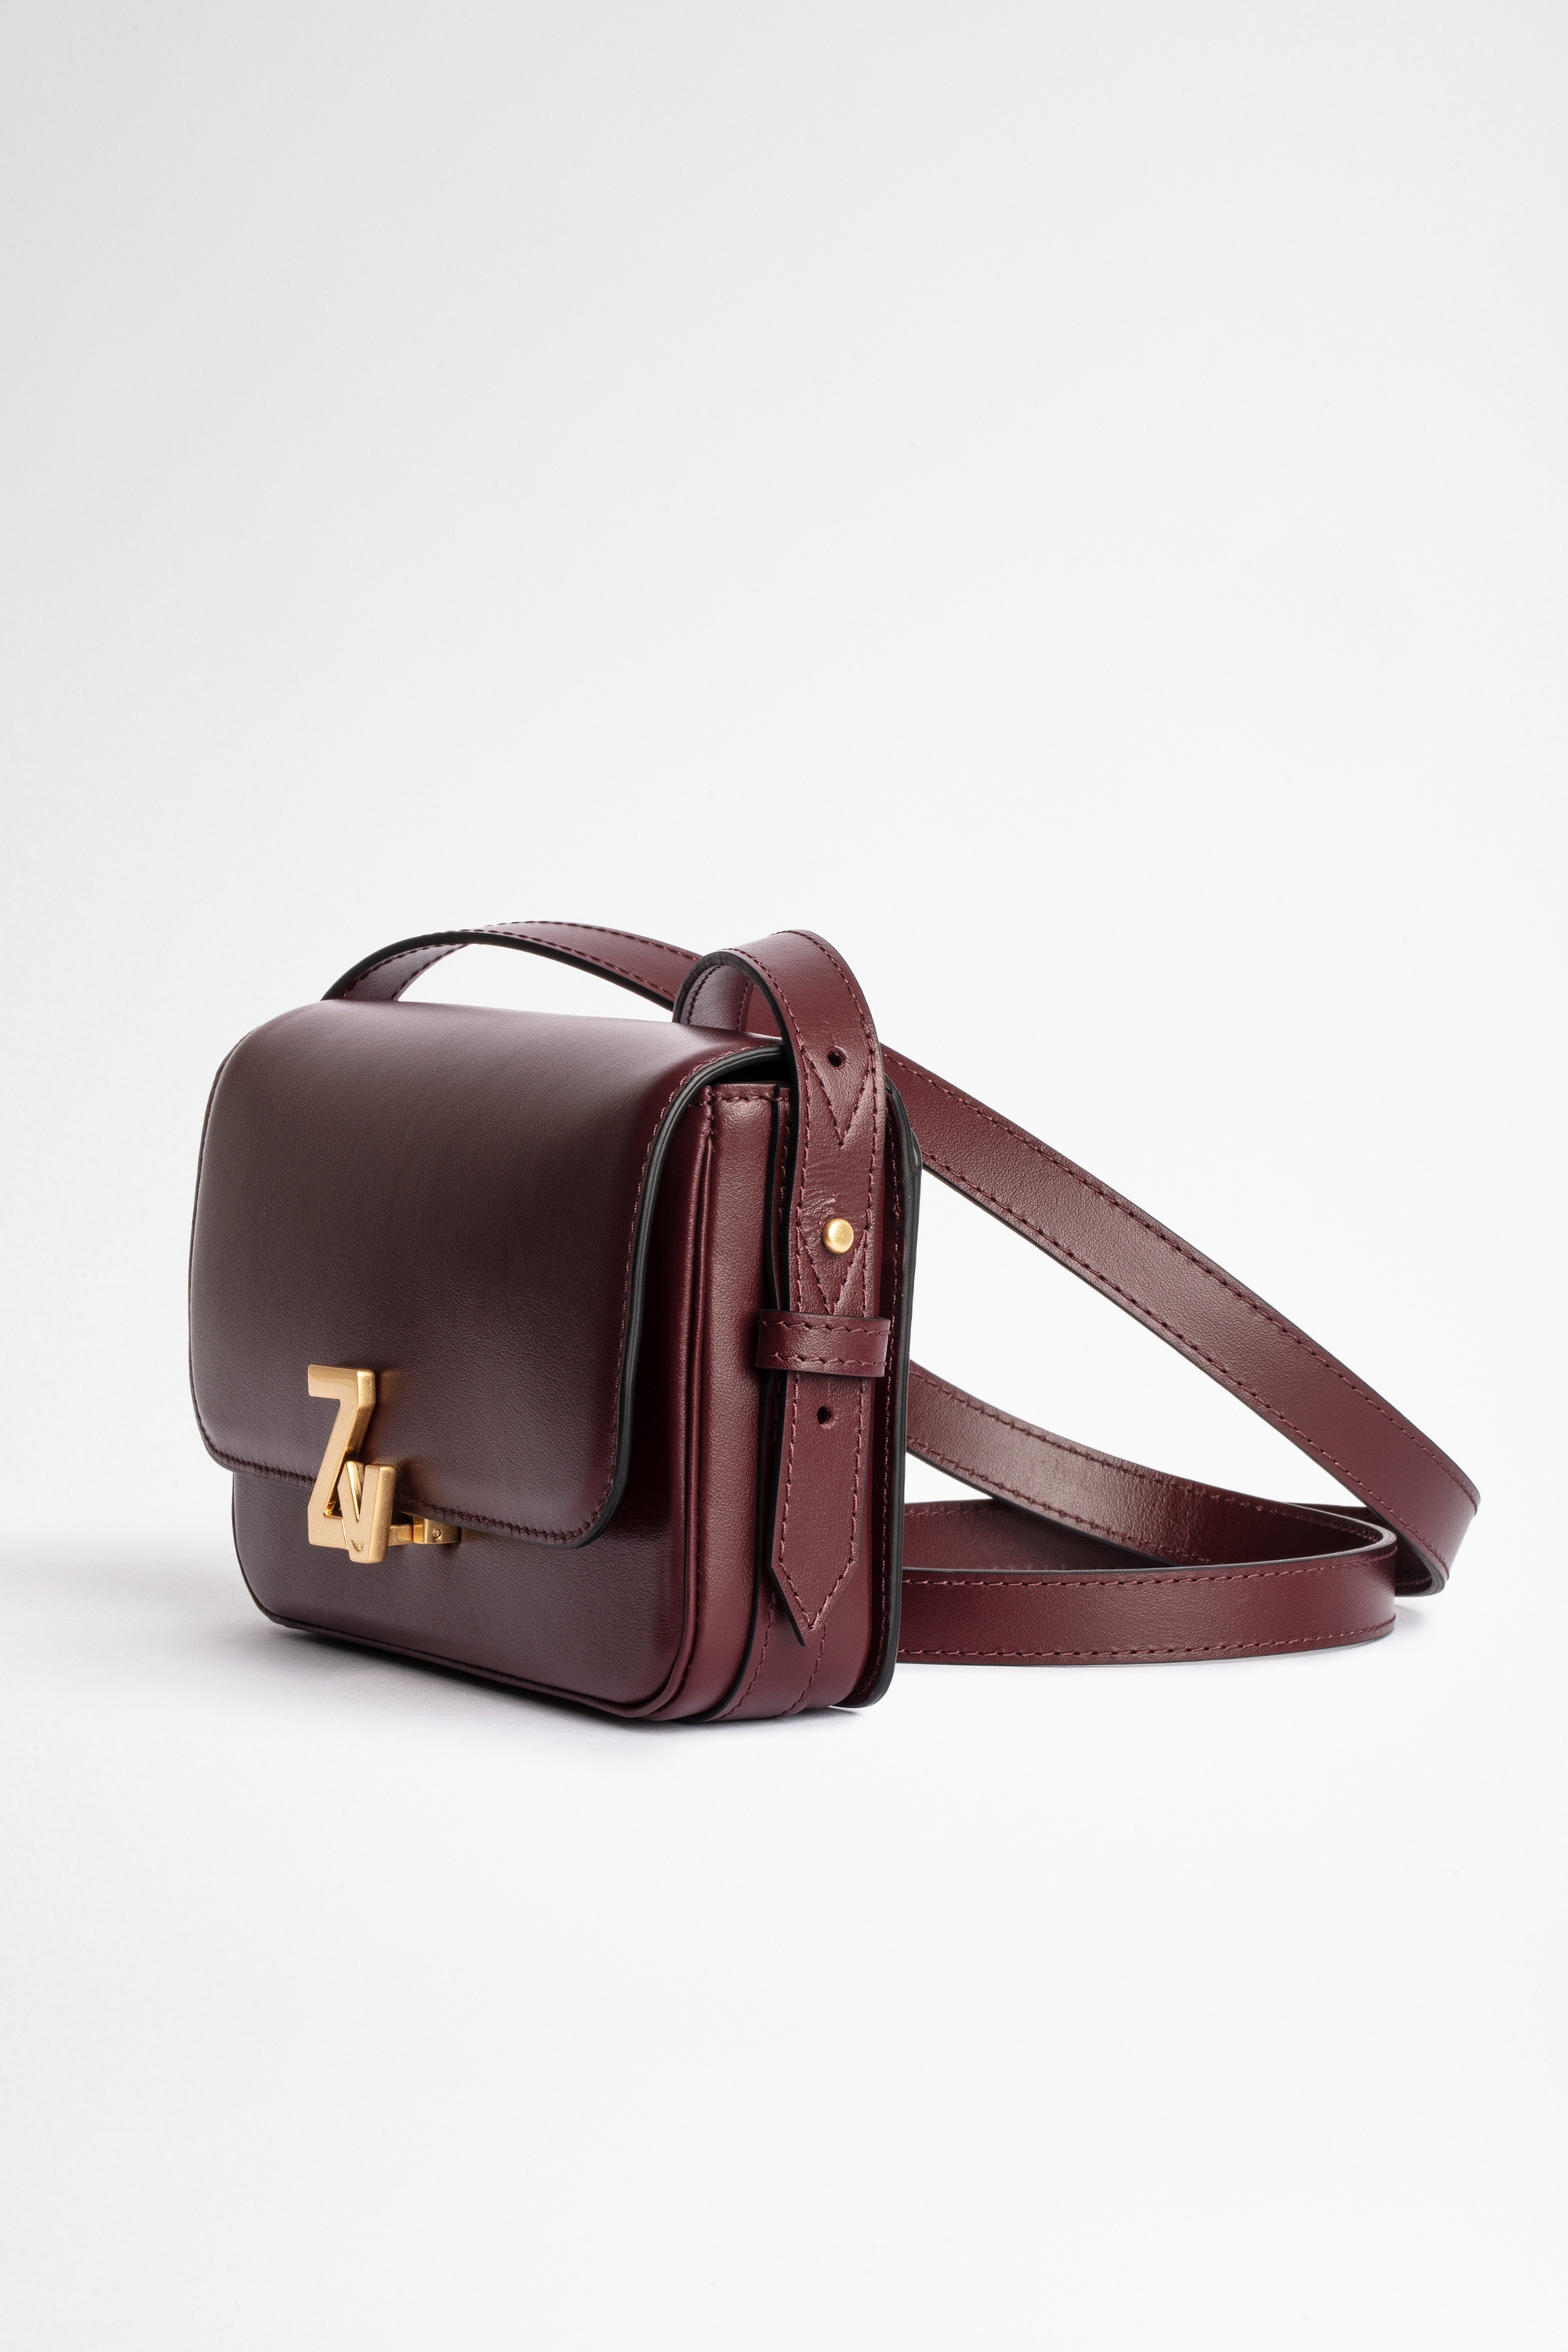 ZV Initiale Le Mini Bag